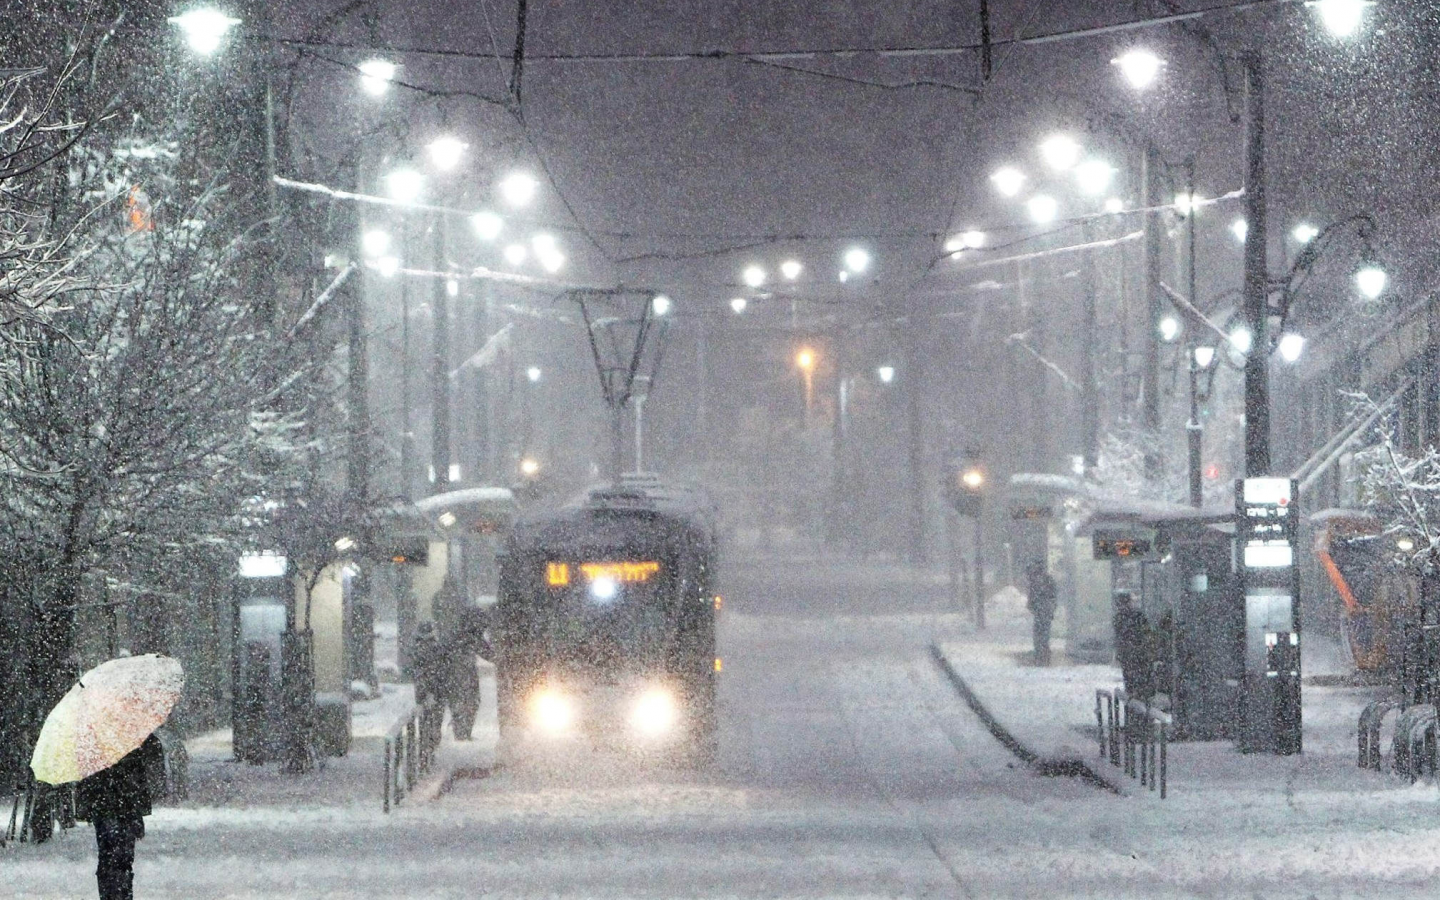 город, зима, снегопад, снег, трамвай, дома, фонари, остановка, люди, провода, деревья